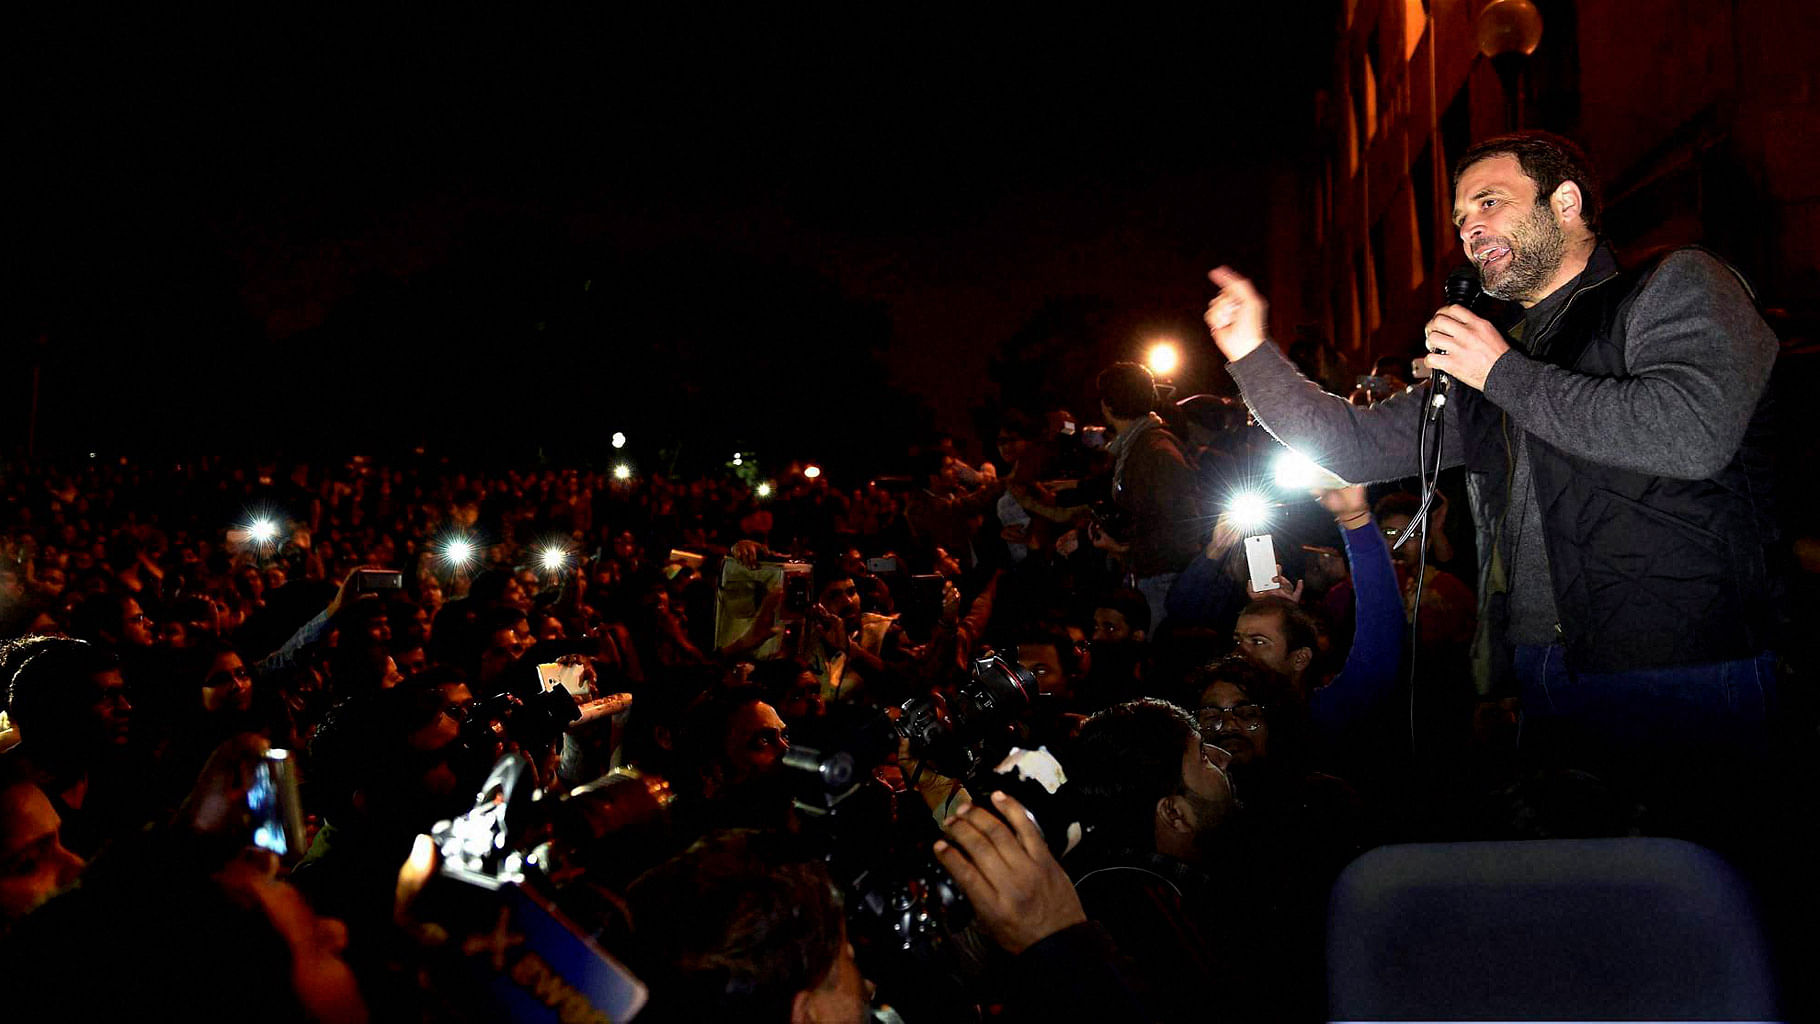 Congress vice president Rahul Gandhi speaking to protesting students at JNU, Delhi on Saturday, 13 February. (Photo: PTI)